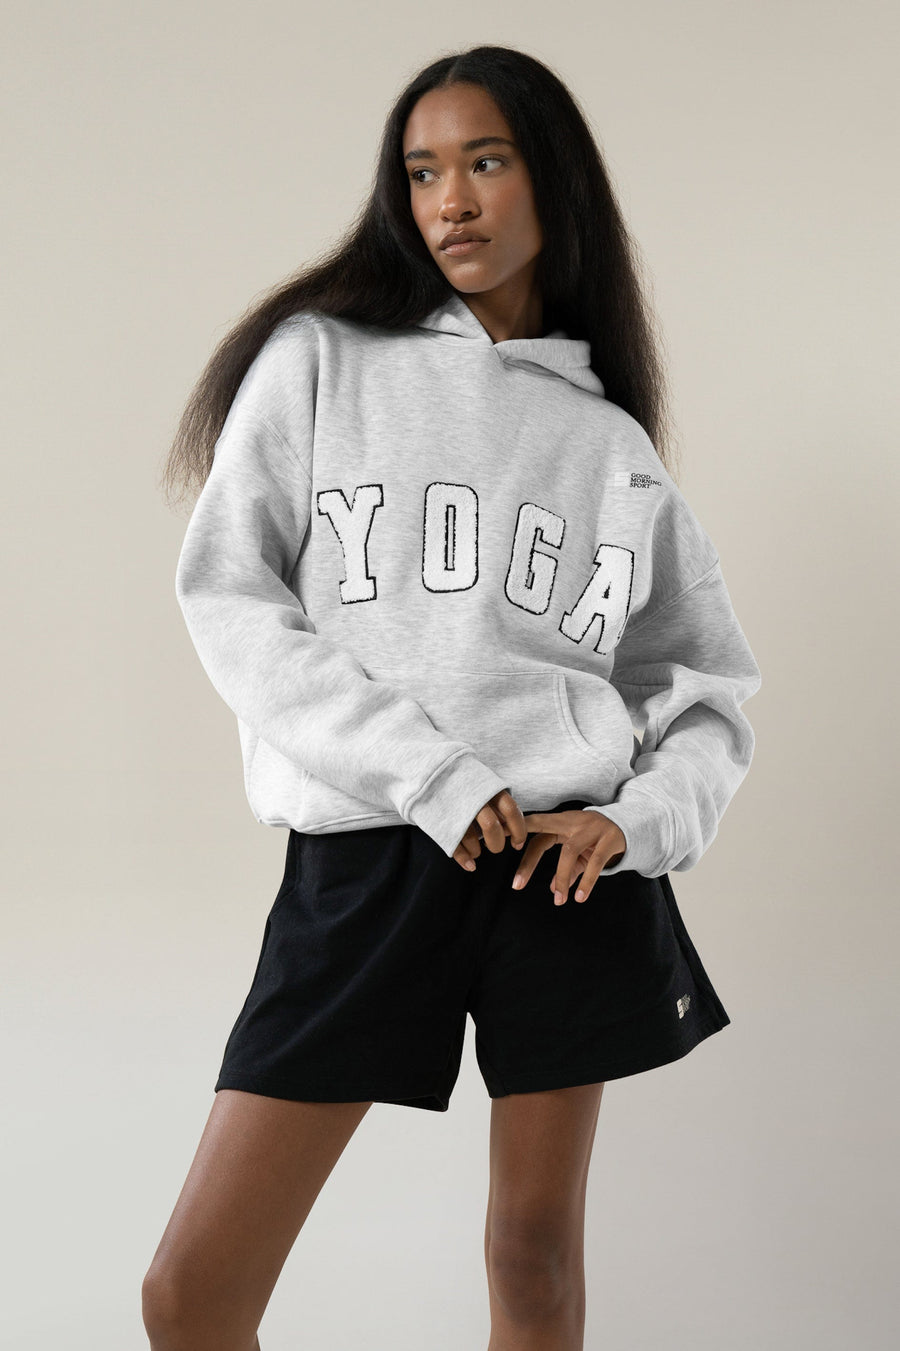 Sykooria Womens Pullover Yoga Top Hooded Shirt Gray Sleeveless Round Neck  XL New